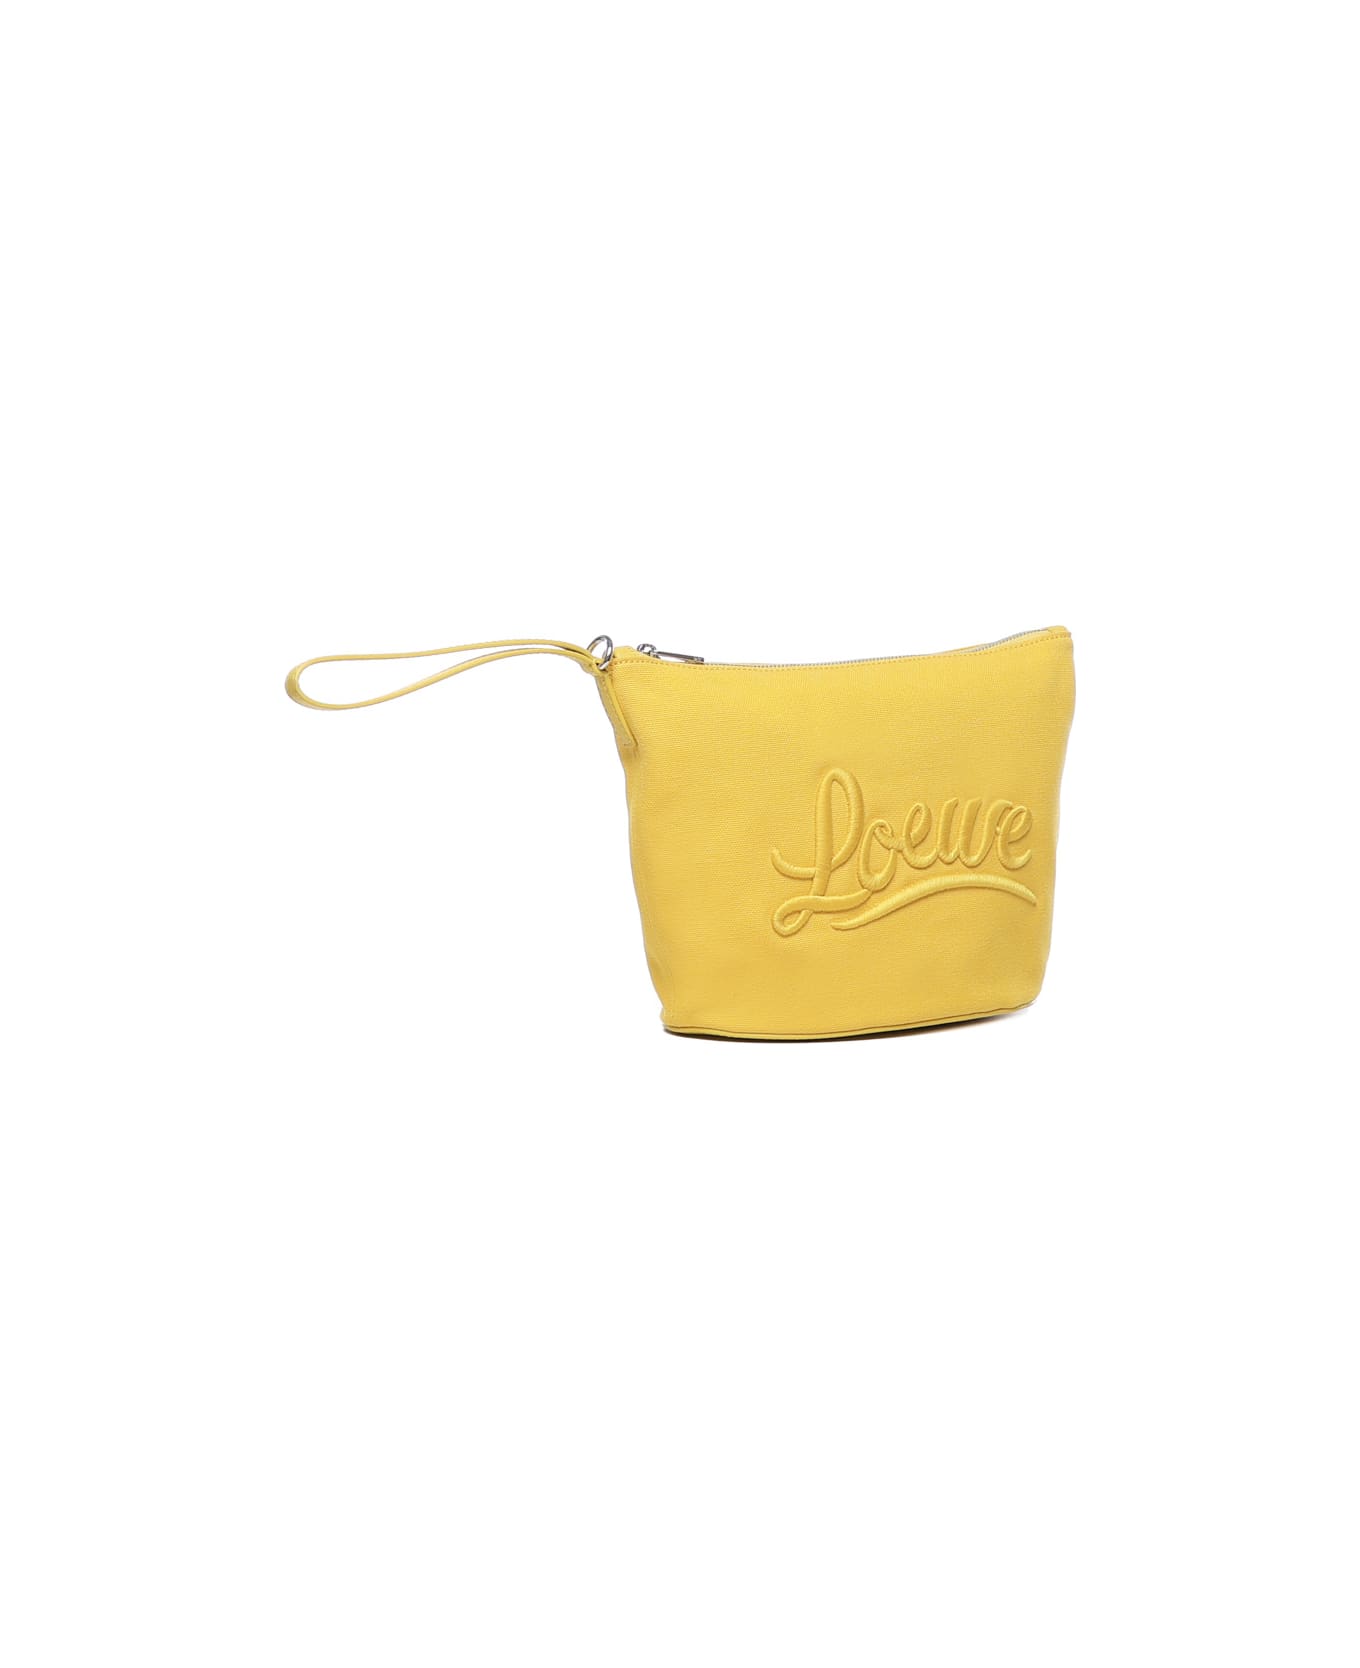 Loewe X Paula's Ibiza Cosmetic Bag - Yellow クラッチバッグ